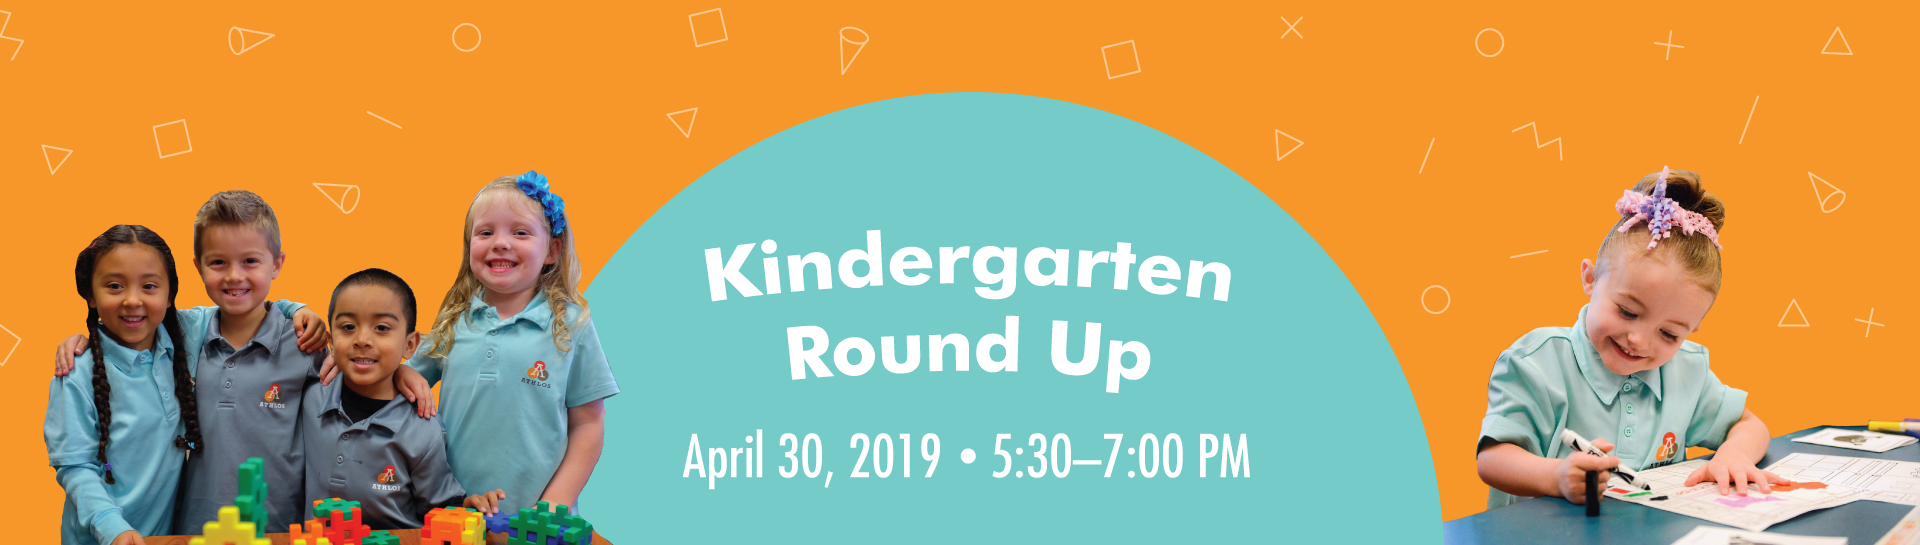 Kindergarten Round Up - April 30, 2019